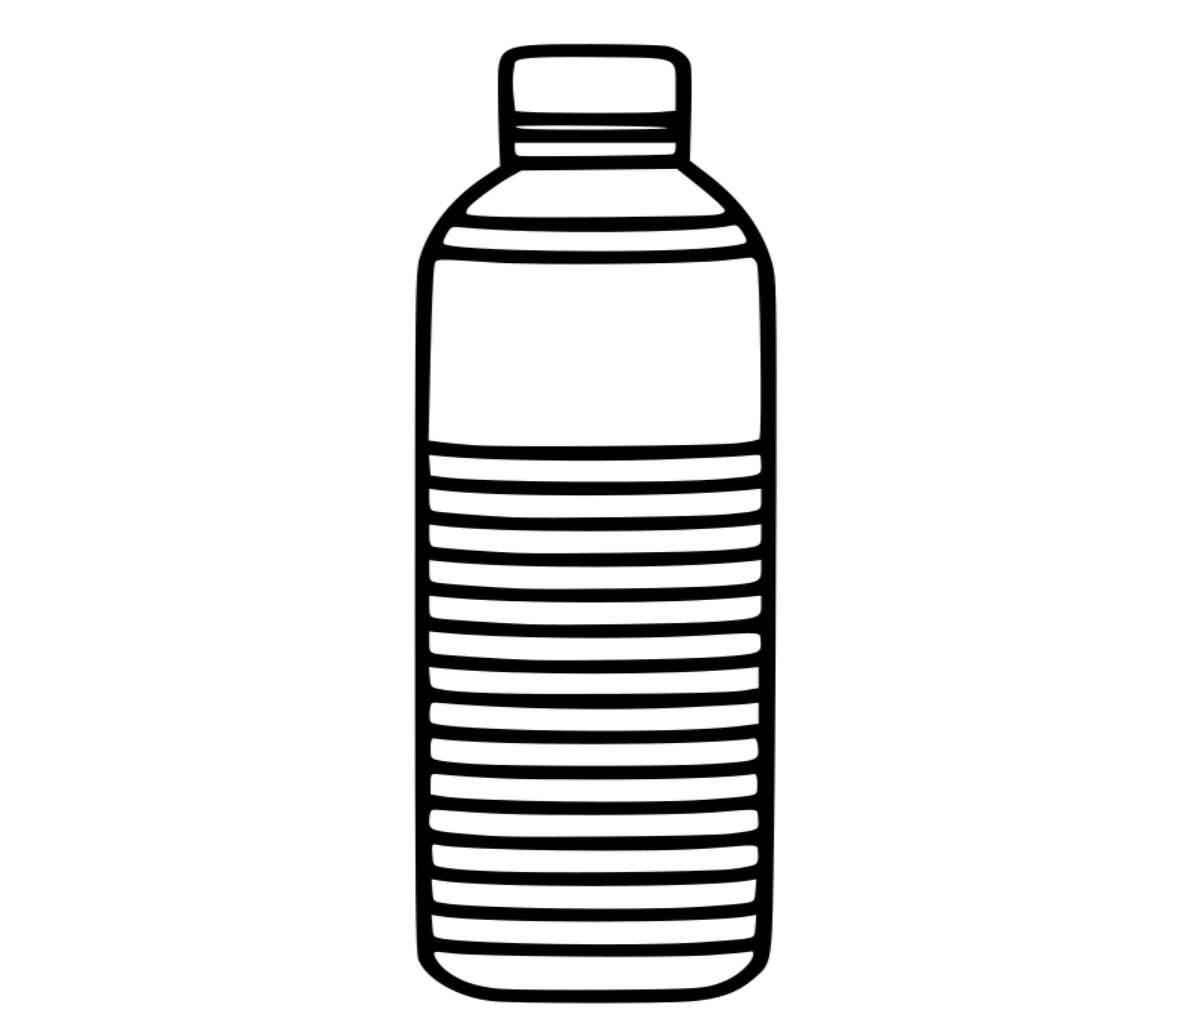 RLTP symbol